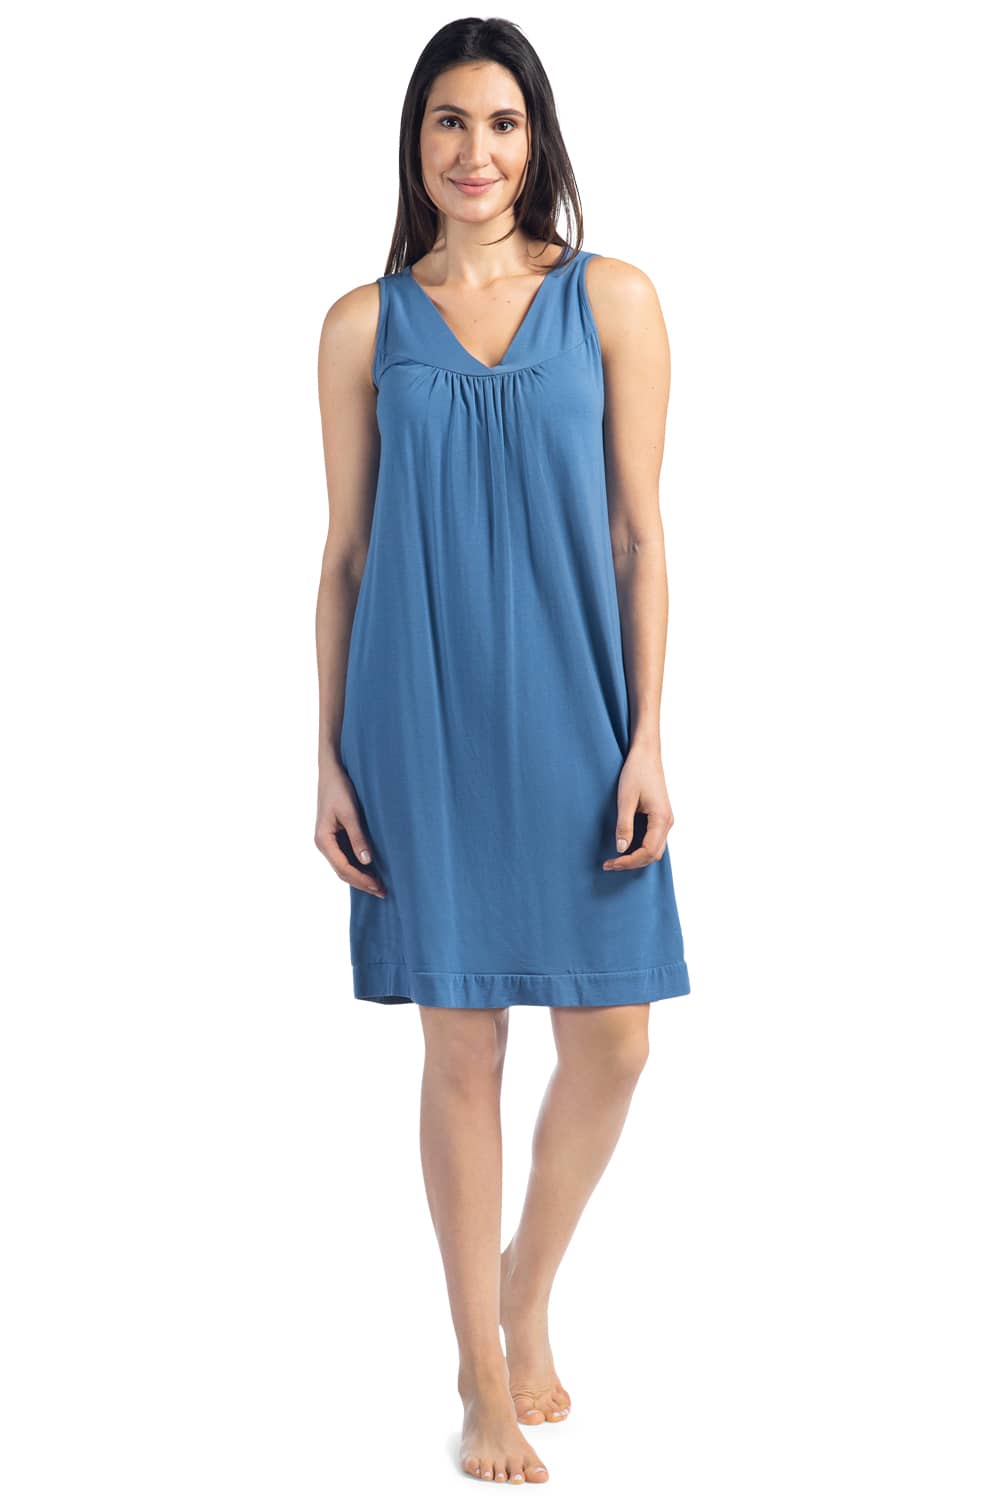 Buy CLOVIA Womens Sleeveless Nightgown